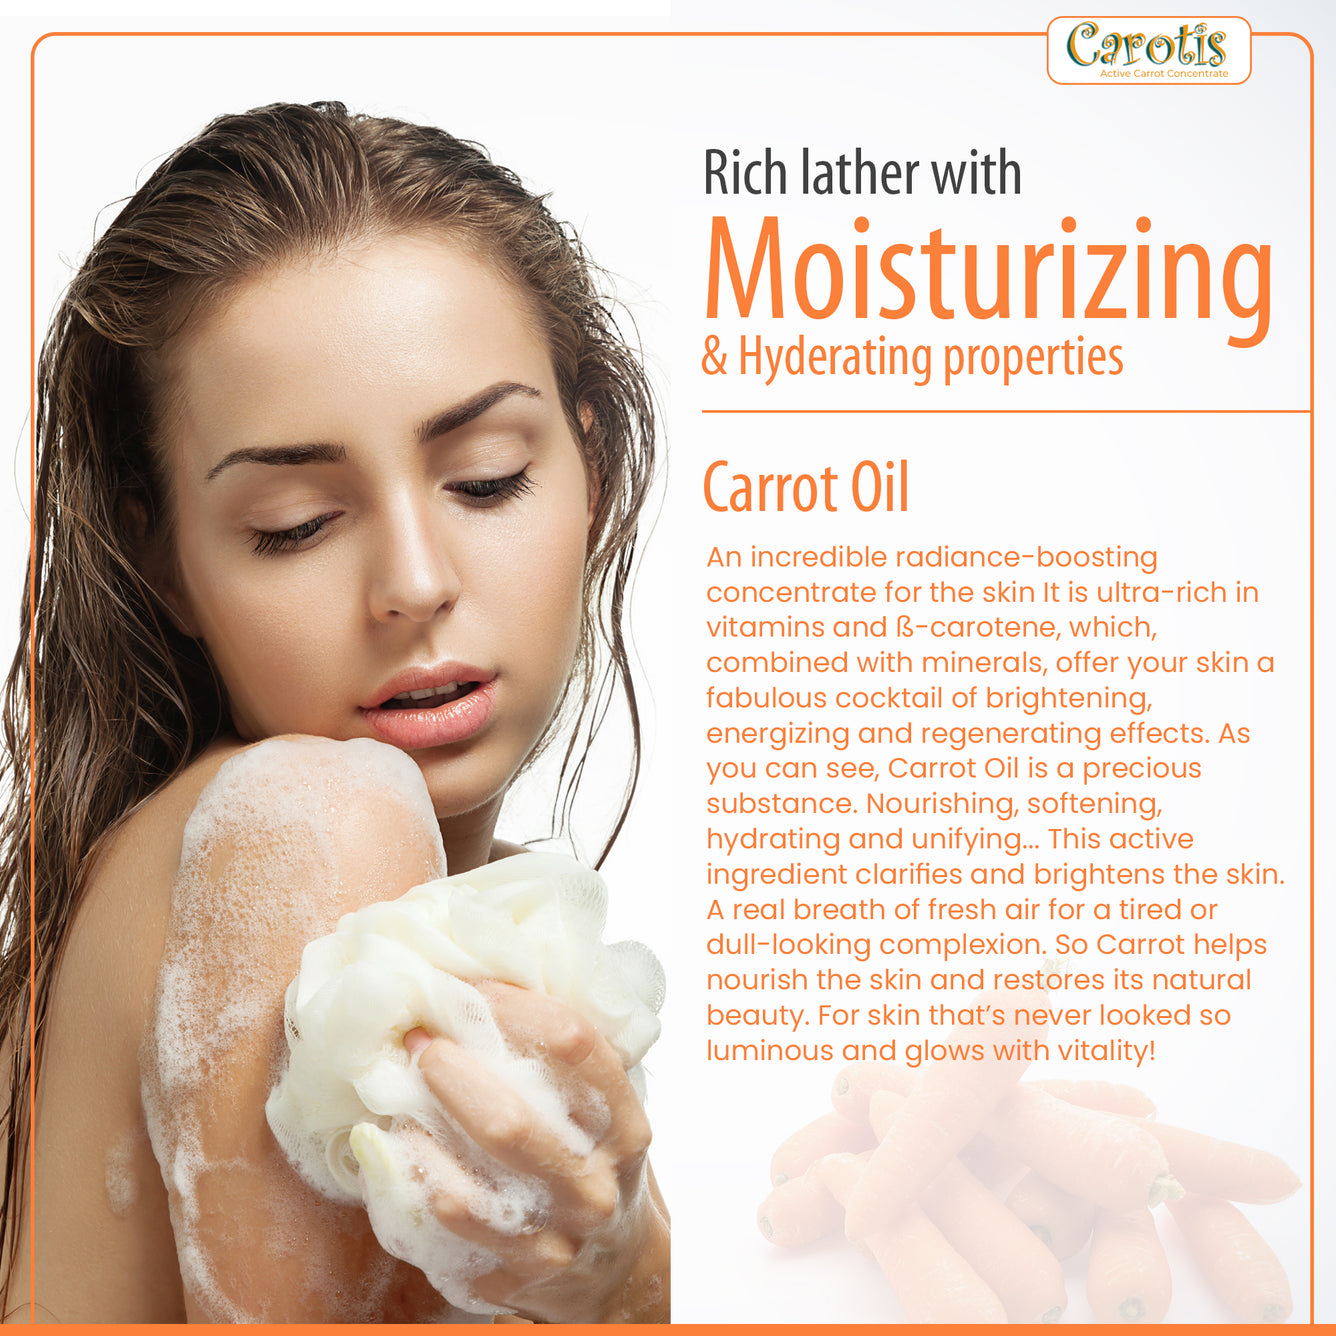 Carotis Beauty Soap - 80g / 2.82 fl oz Carotis - Mitchell Brands - Skin Lightening, Skin Brightening, Fade Dark Spots, Shea Butter, Hair Growth Products